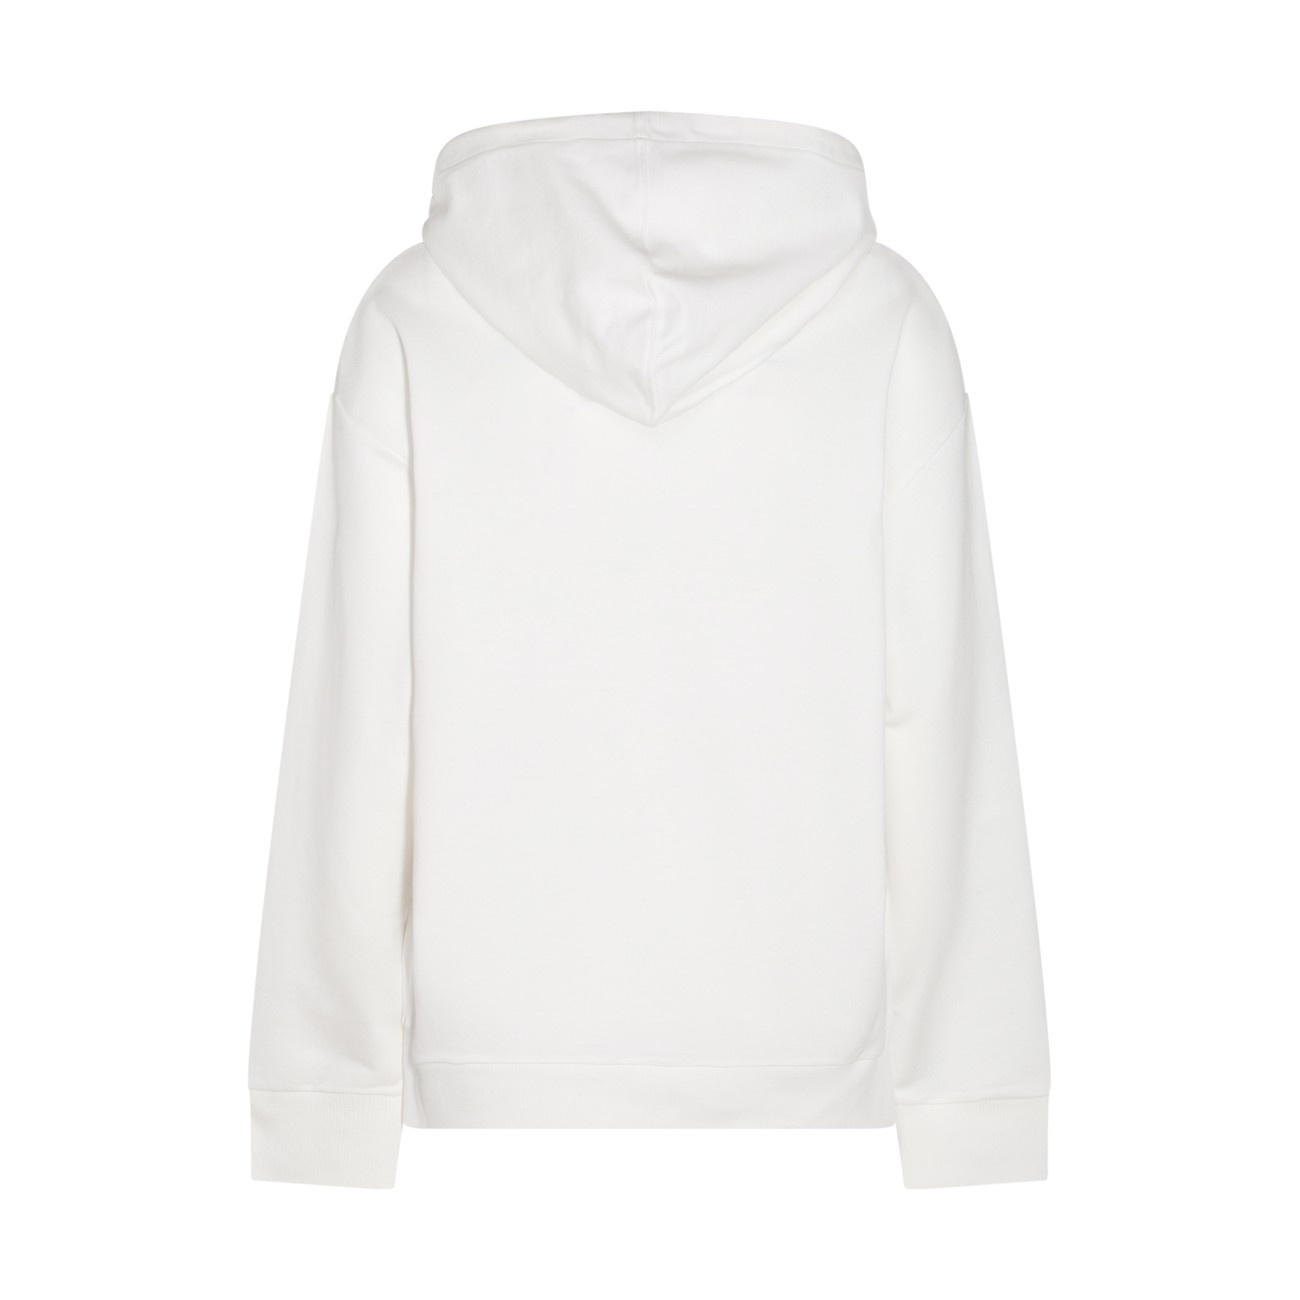 white cotton sweatshirt - 2